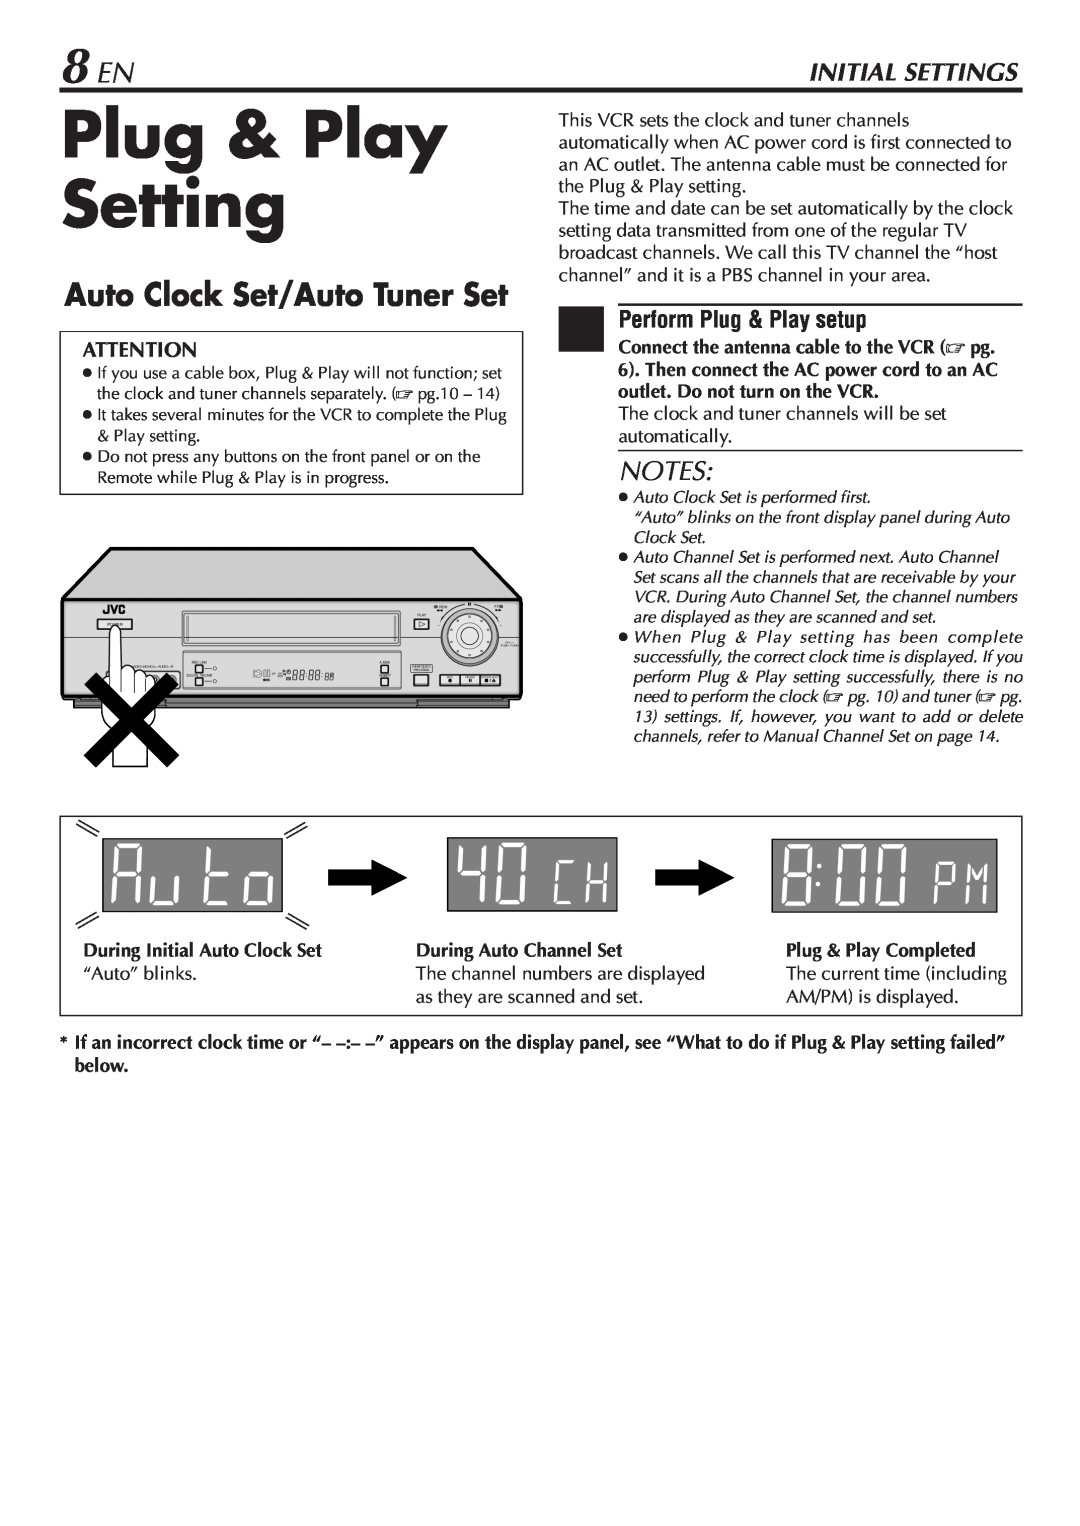 JVC SR-V10U manual Plug & Play Setting, 8 EN, Auto Clock Set/Auto Tuner Set, Initial Settings, 1Perform Plug & Play setup 